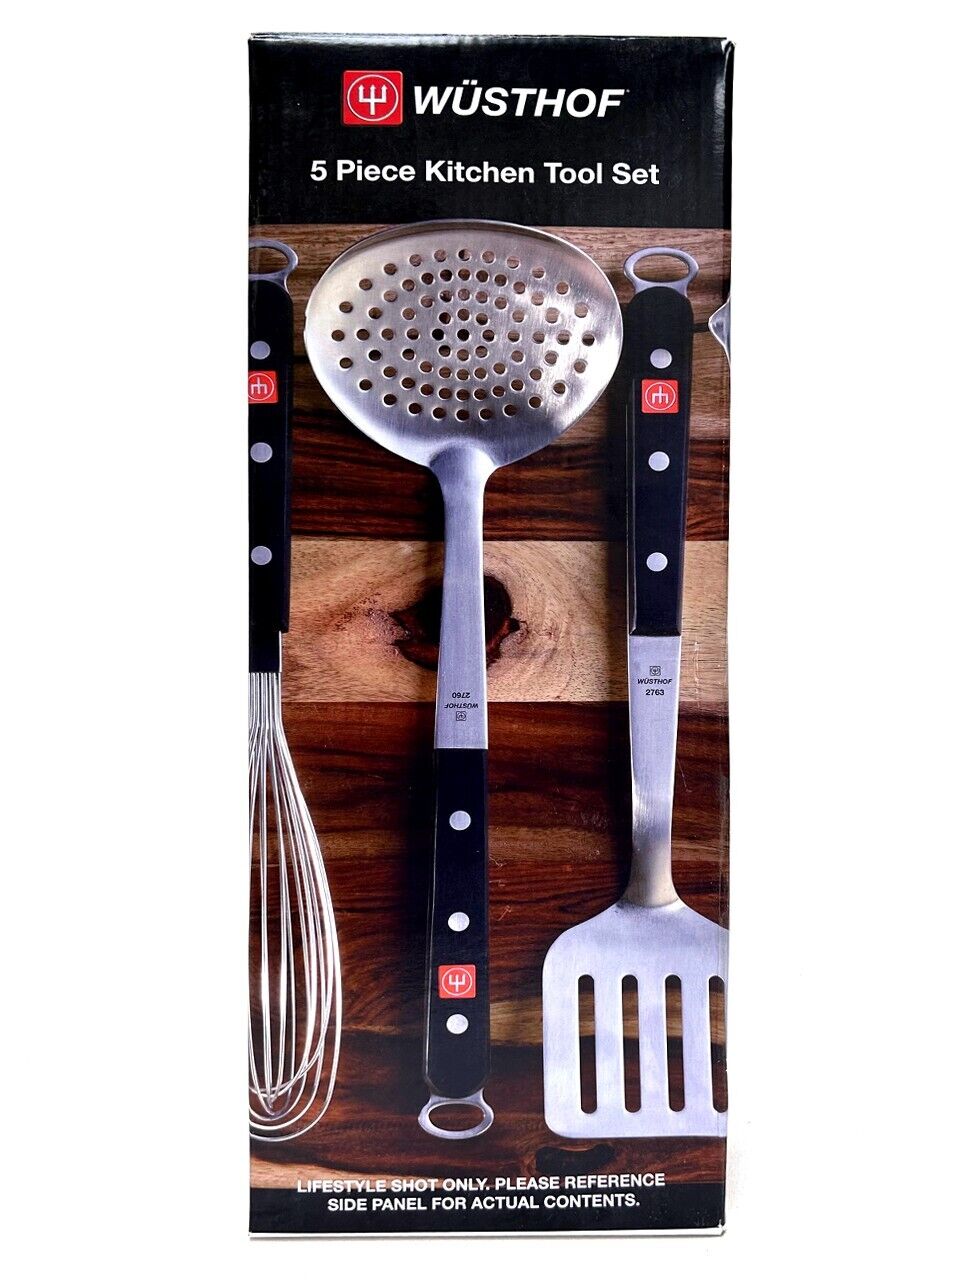 Wusthof 5 Piece Kitchen Tool Set Skimmer Spoon Spatula Ladle New In Box